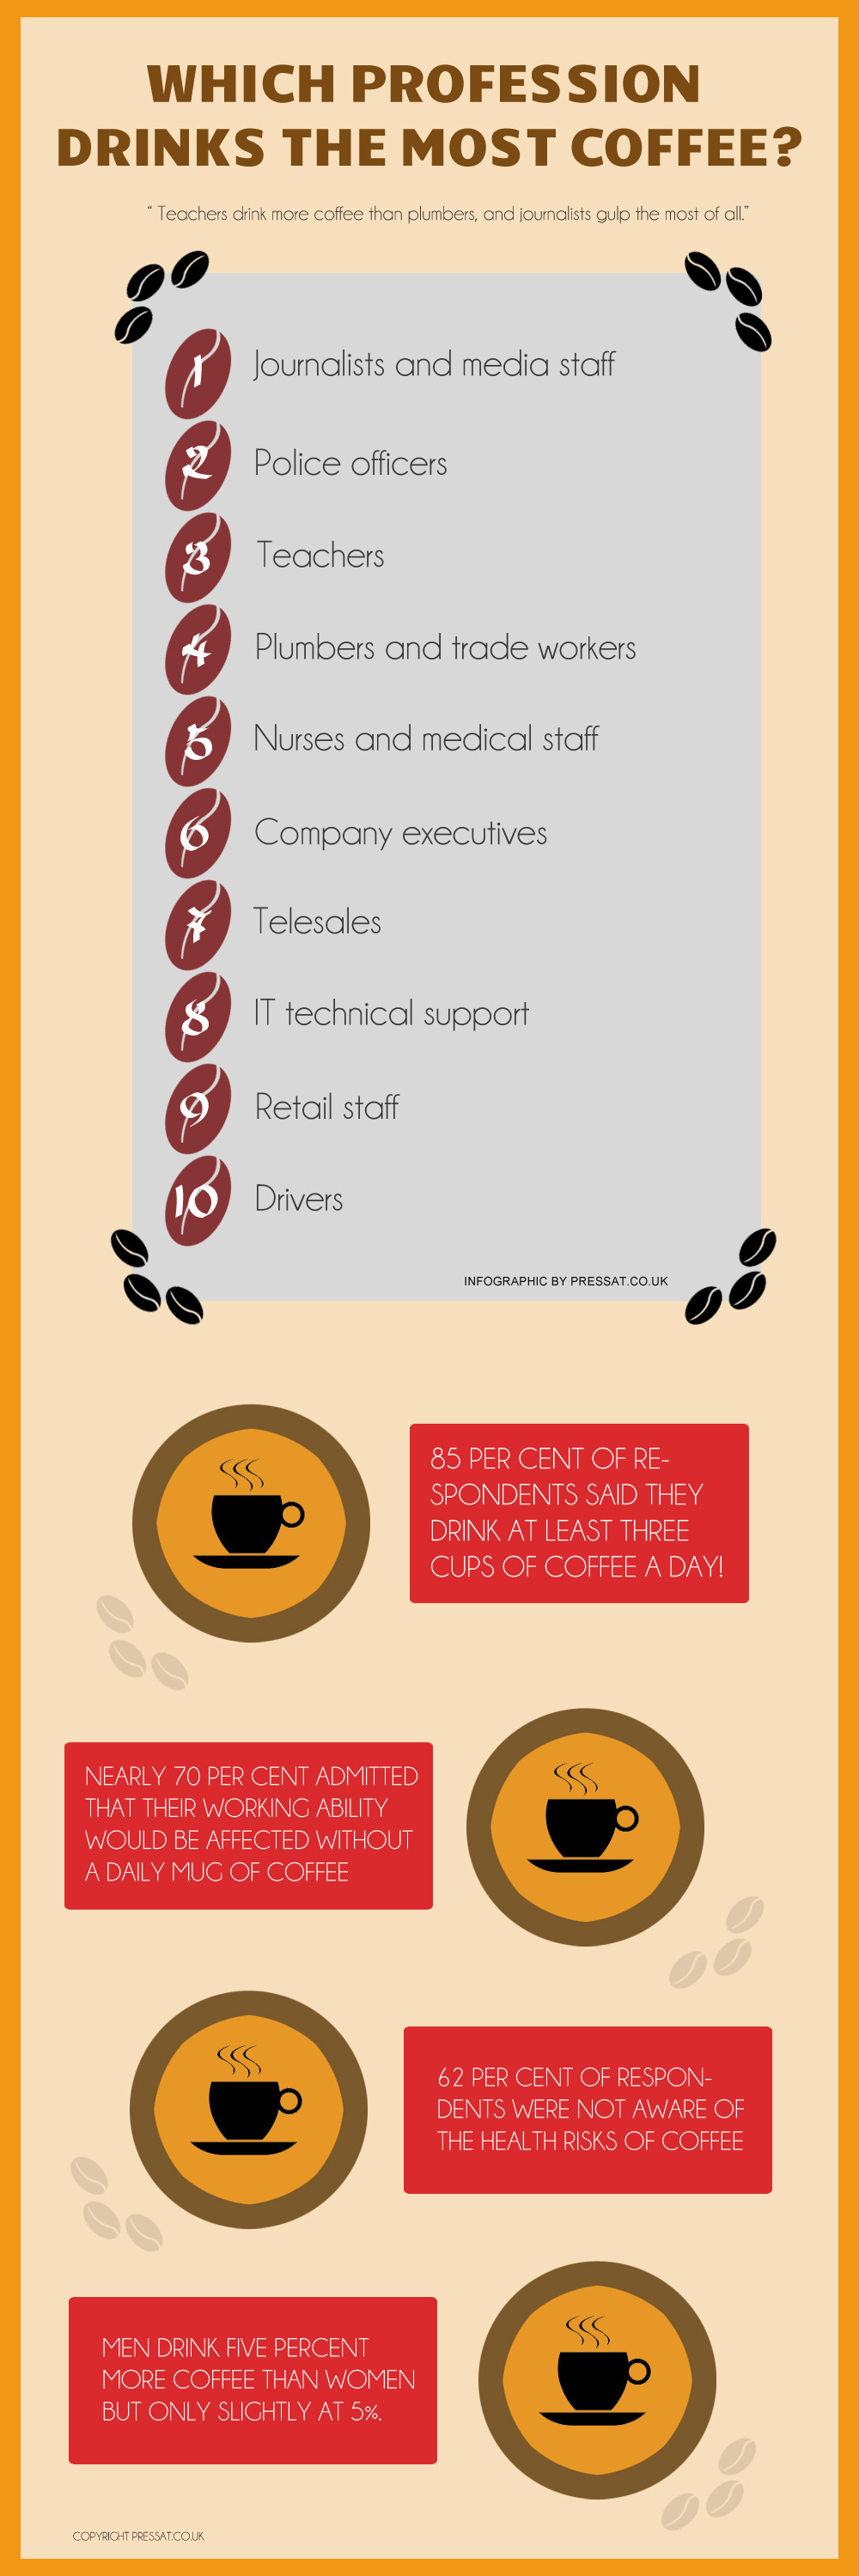 coffee-professions1